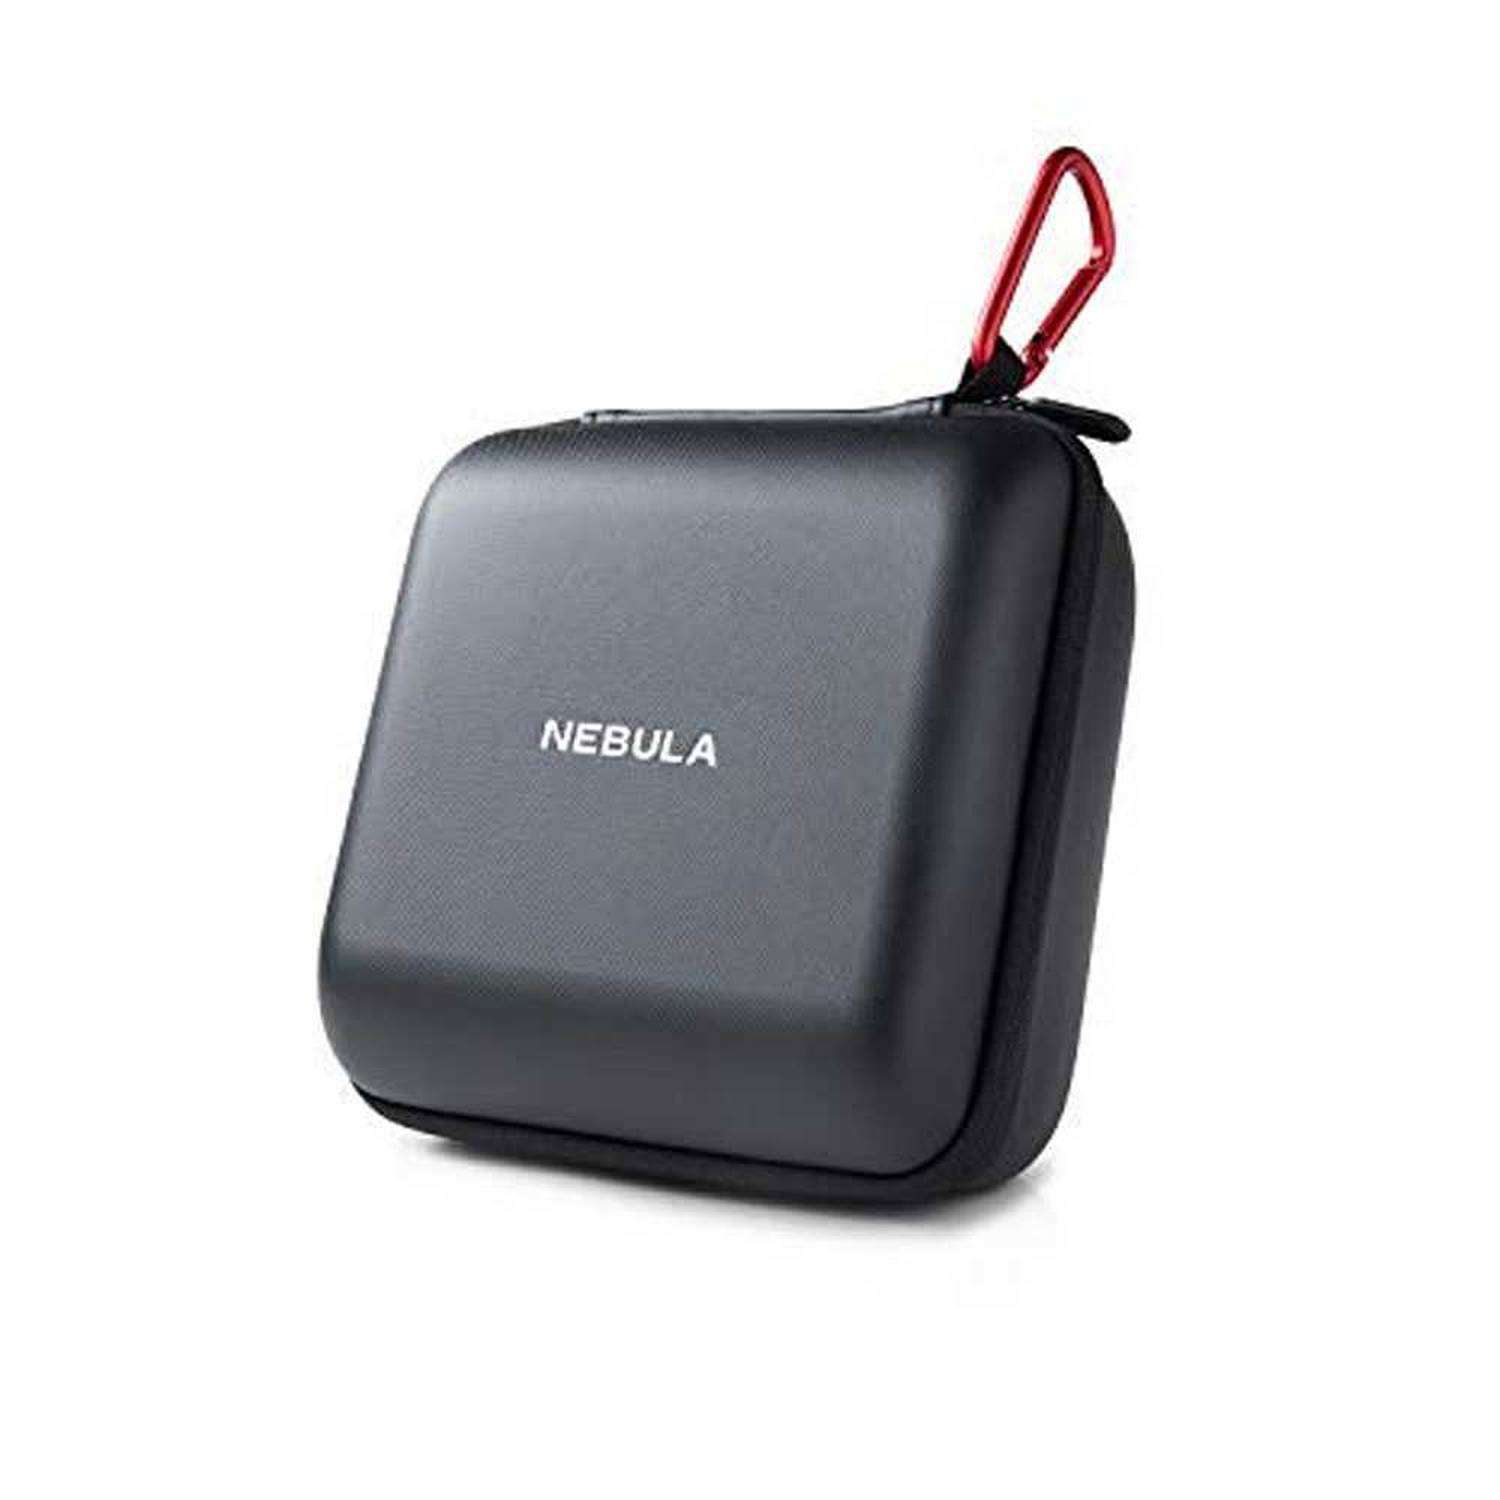 Tailor-made Anker Nebula Capsule II Portable Travel Case